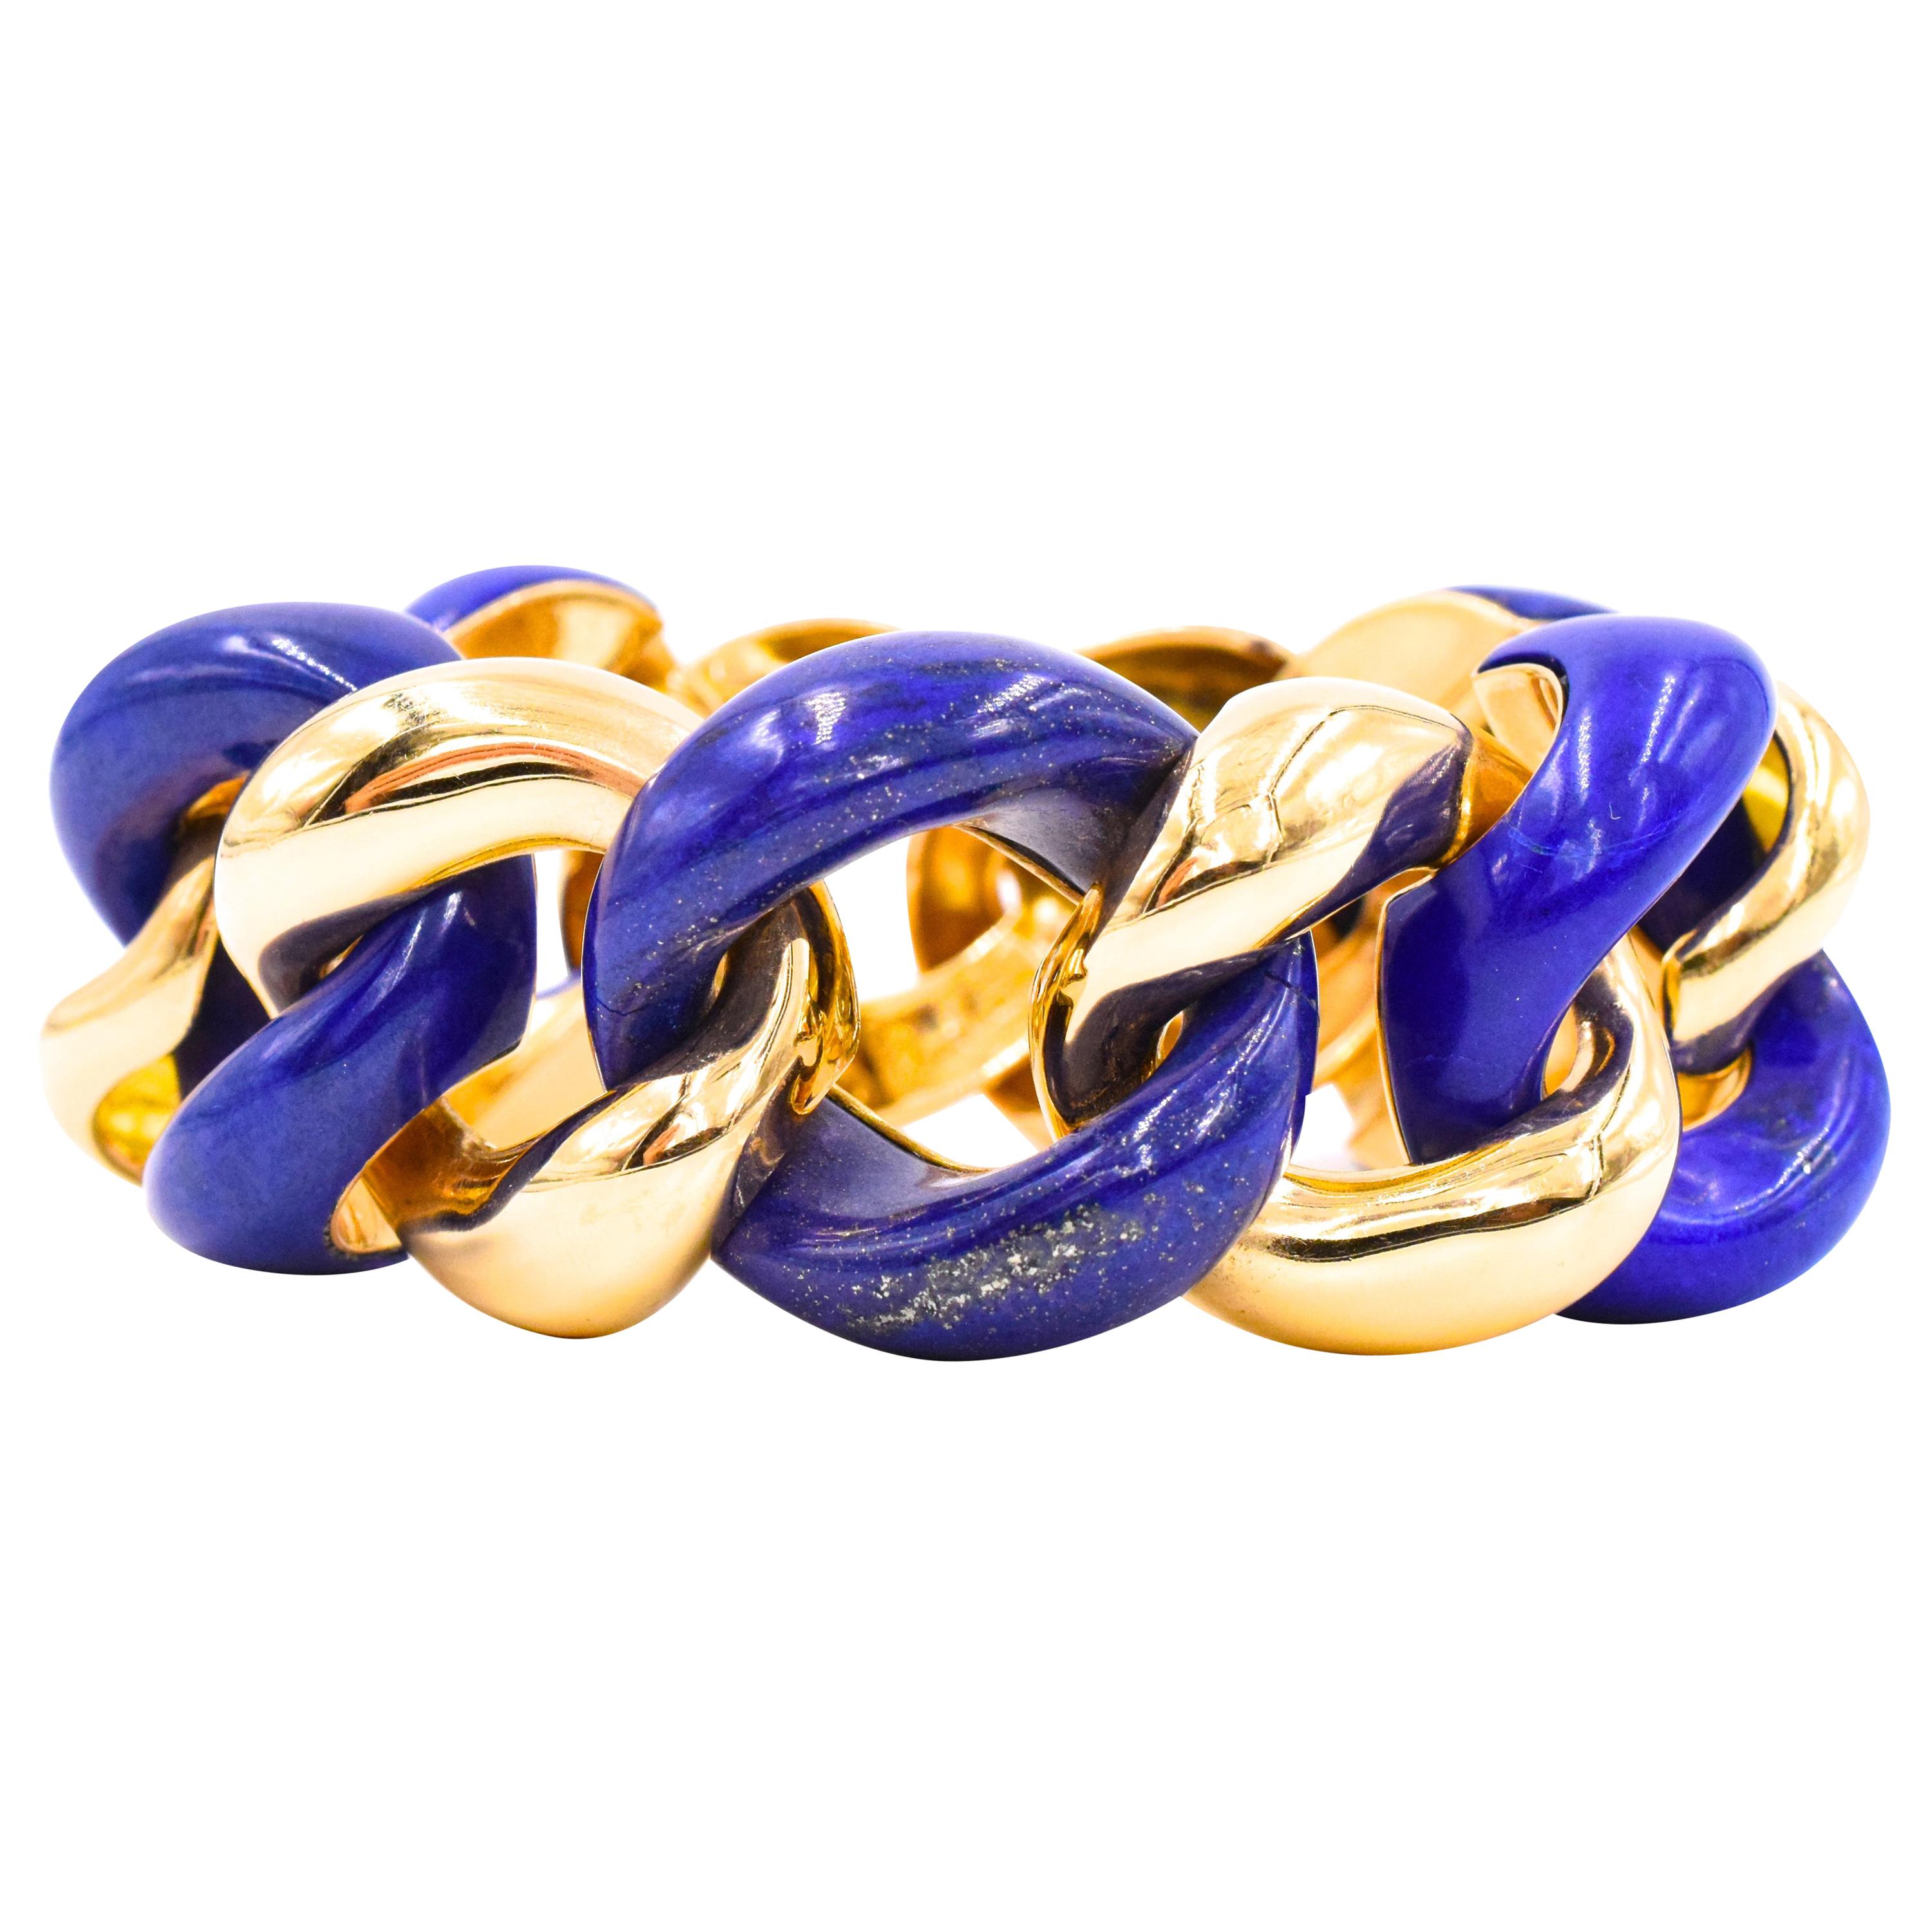 Seaman Schepps Lapis Lazuli and Gold Bracelet